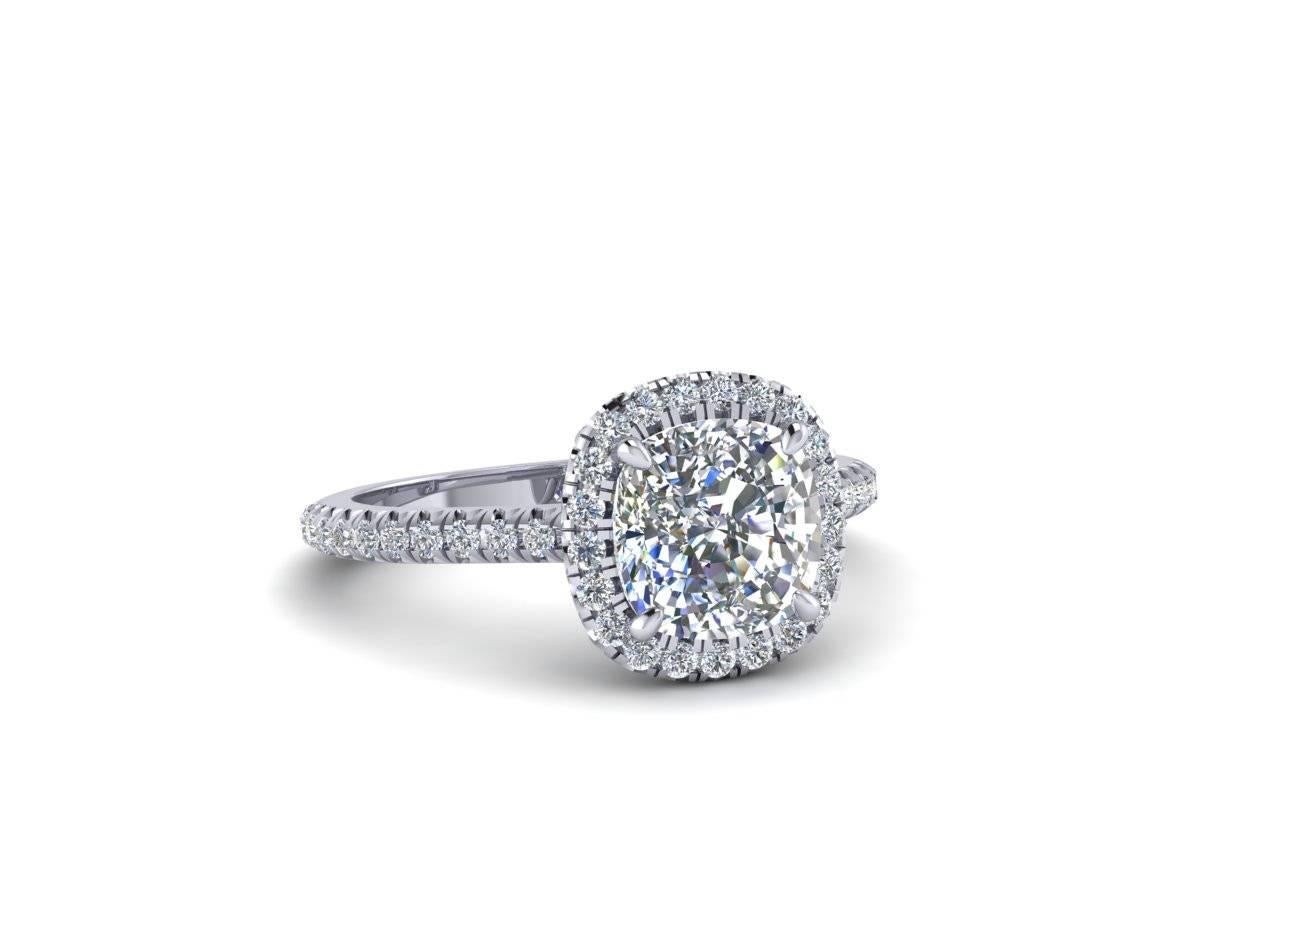 Classical Roman Ferrucci GIA Certified 2.03 Carat Cushion Cut Diamond F Color Engagement Ring